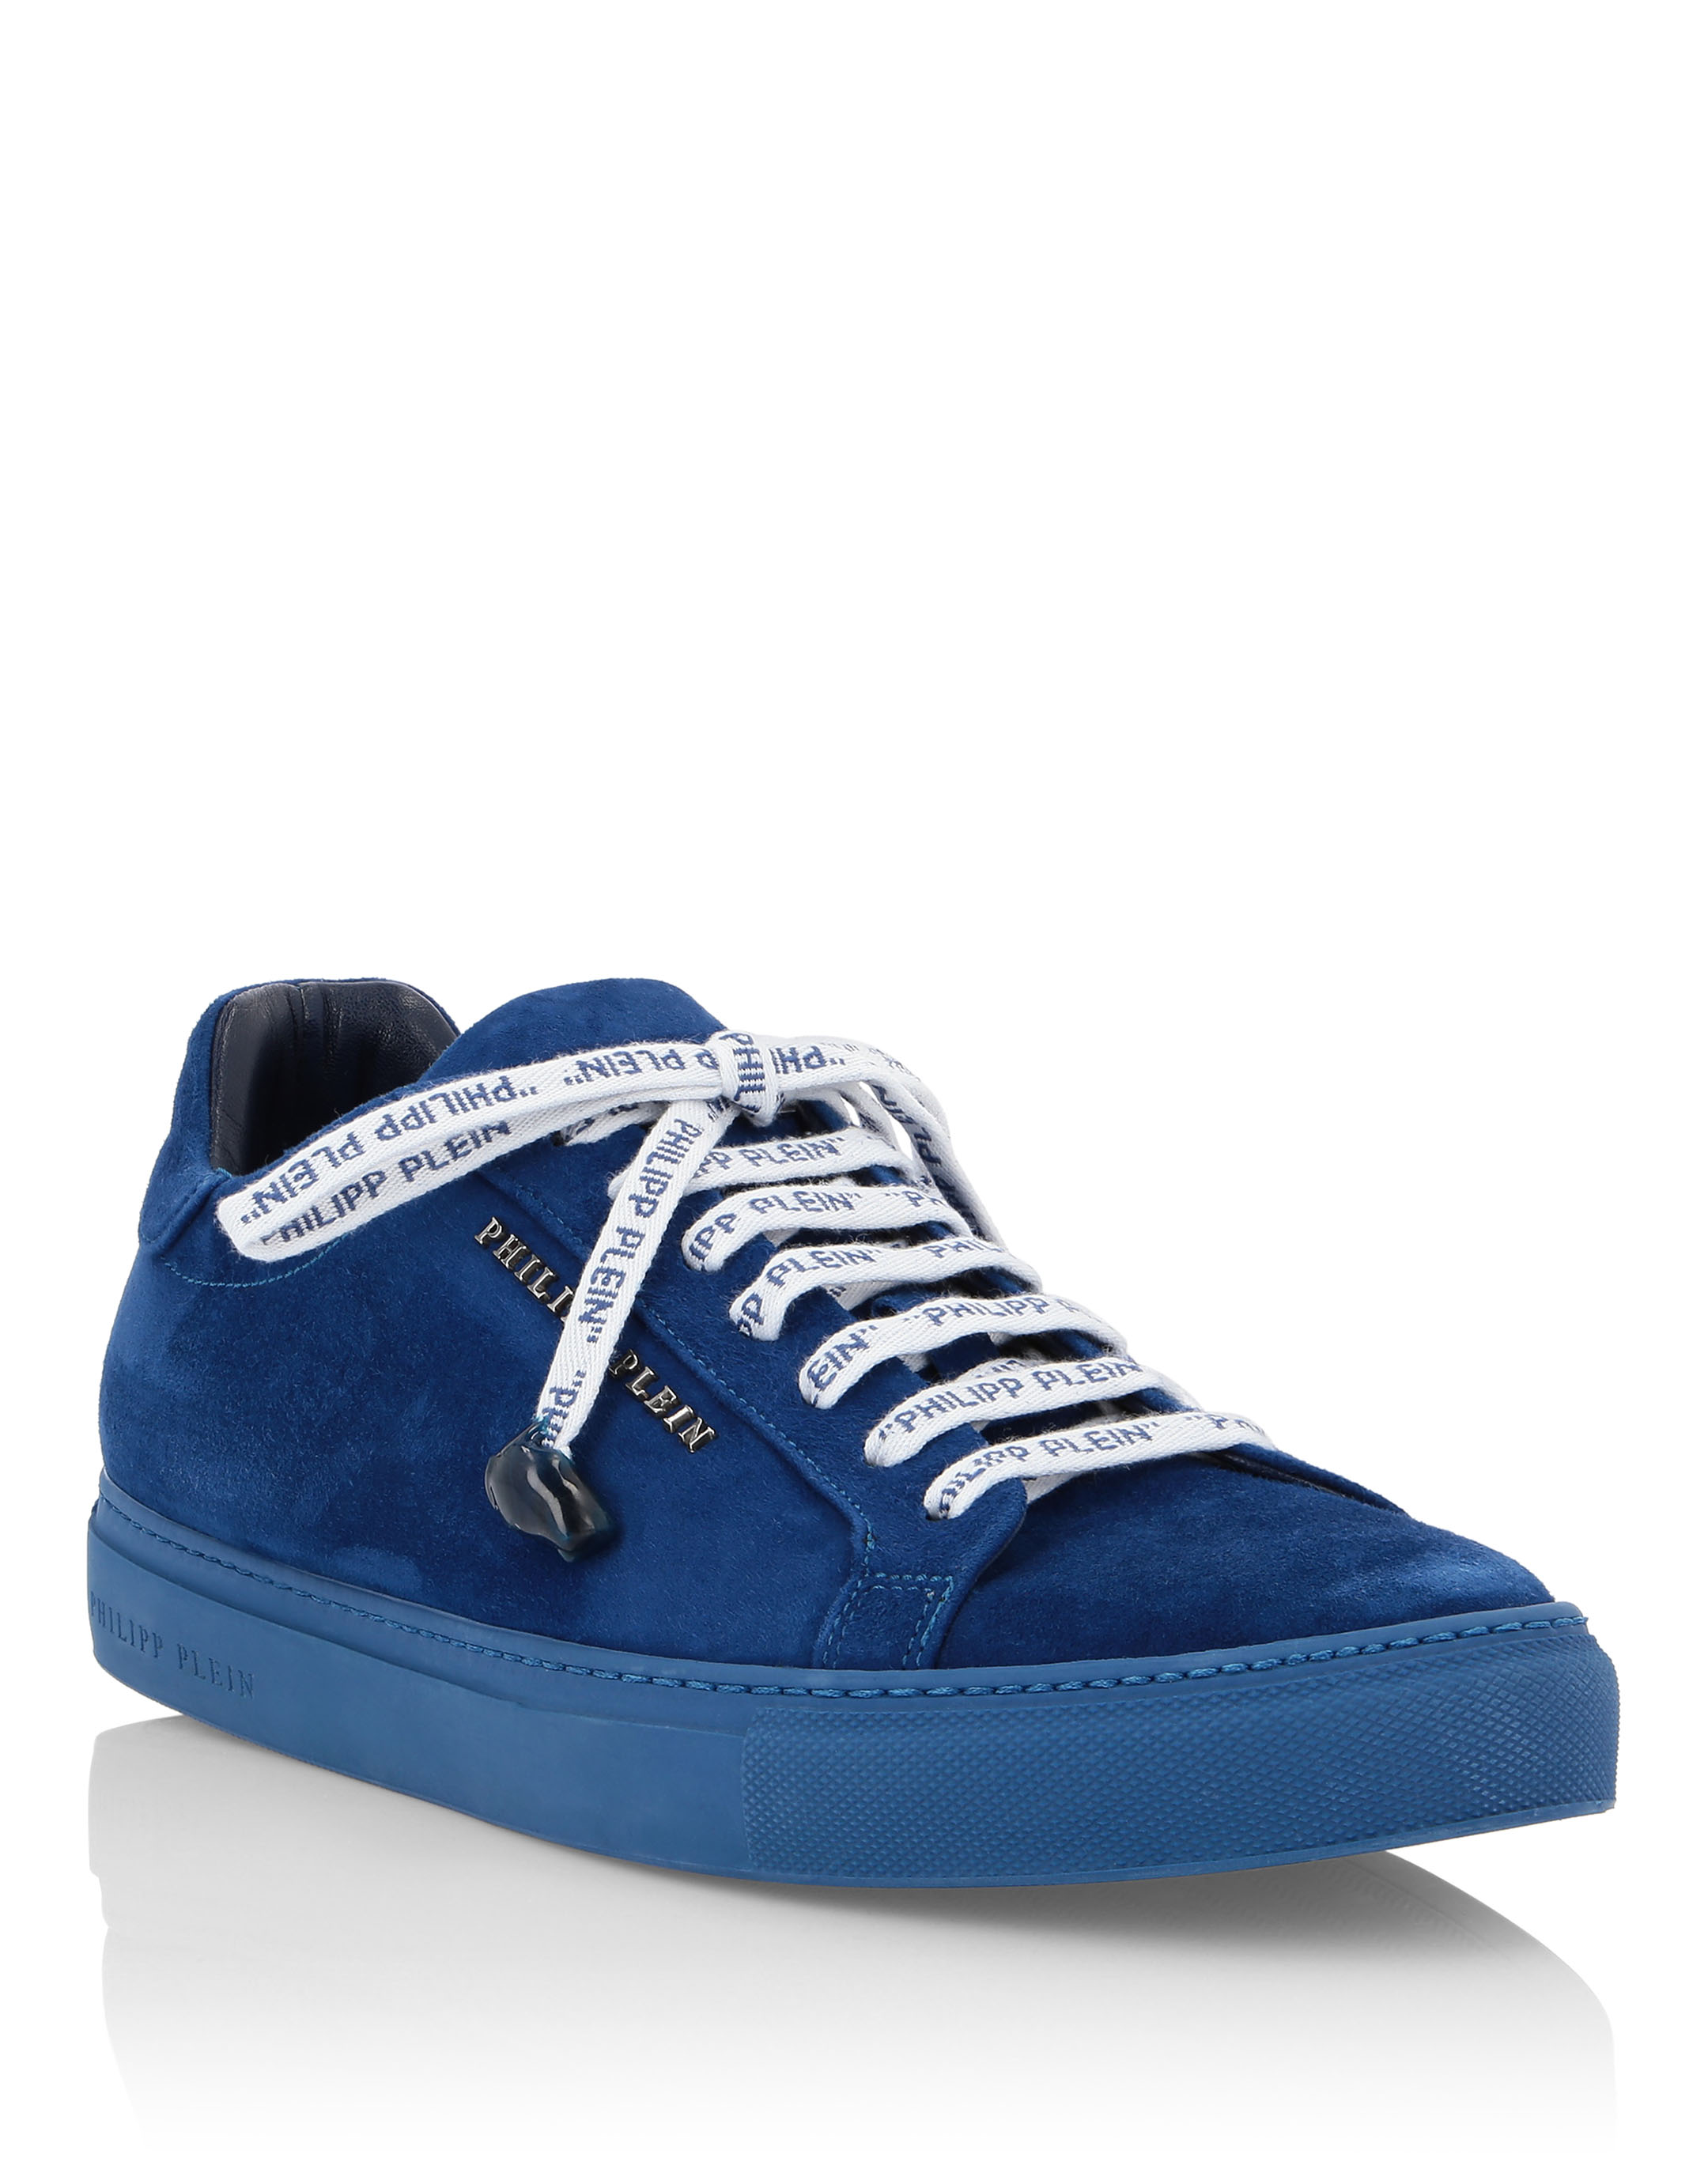 philipp plein blue shoes